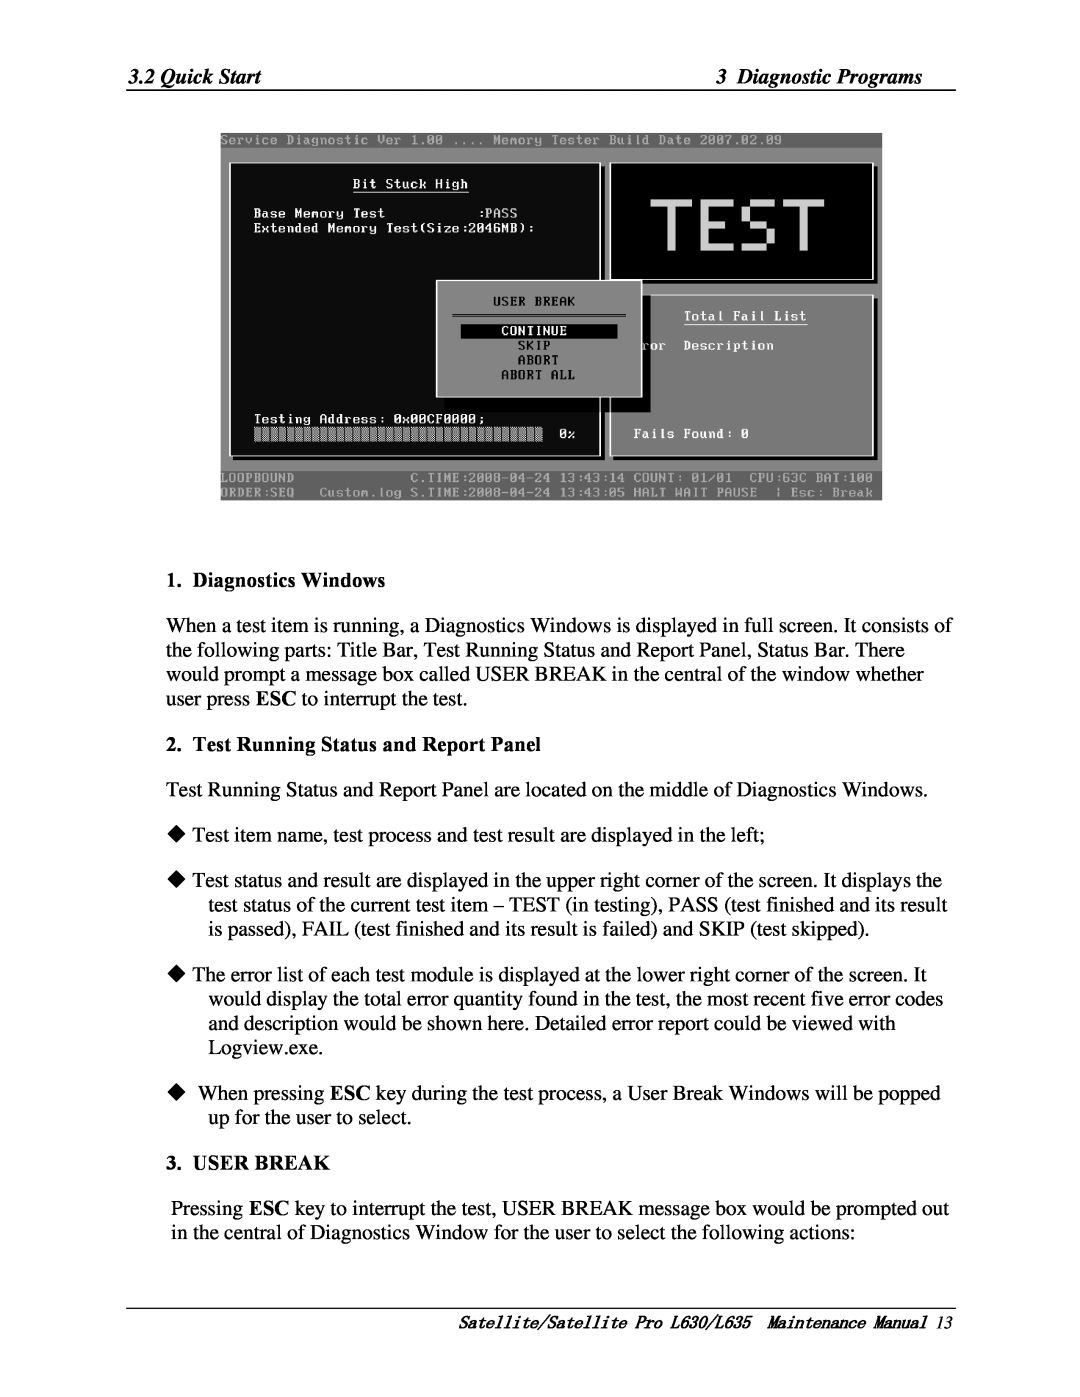 Toshiba L630, L635 manual Diagnostics Windows, Test Running Status and Report Panel, User Break 